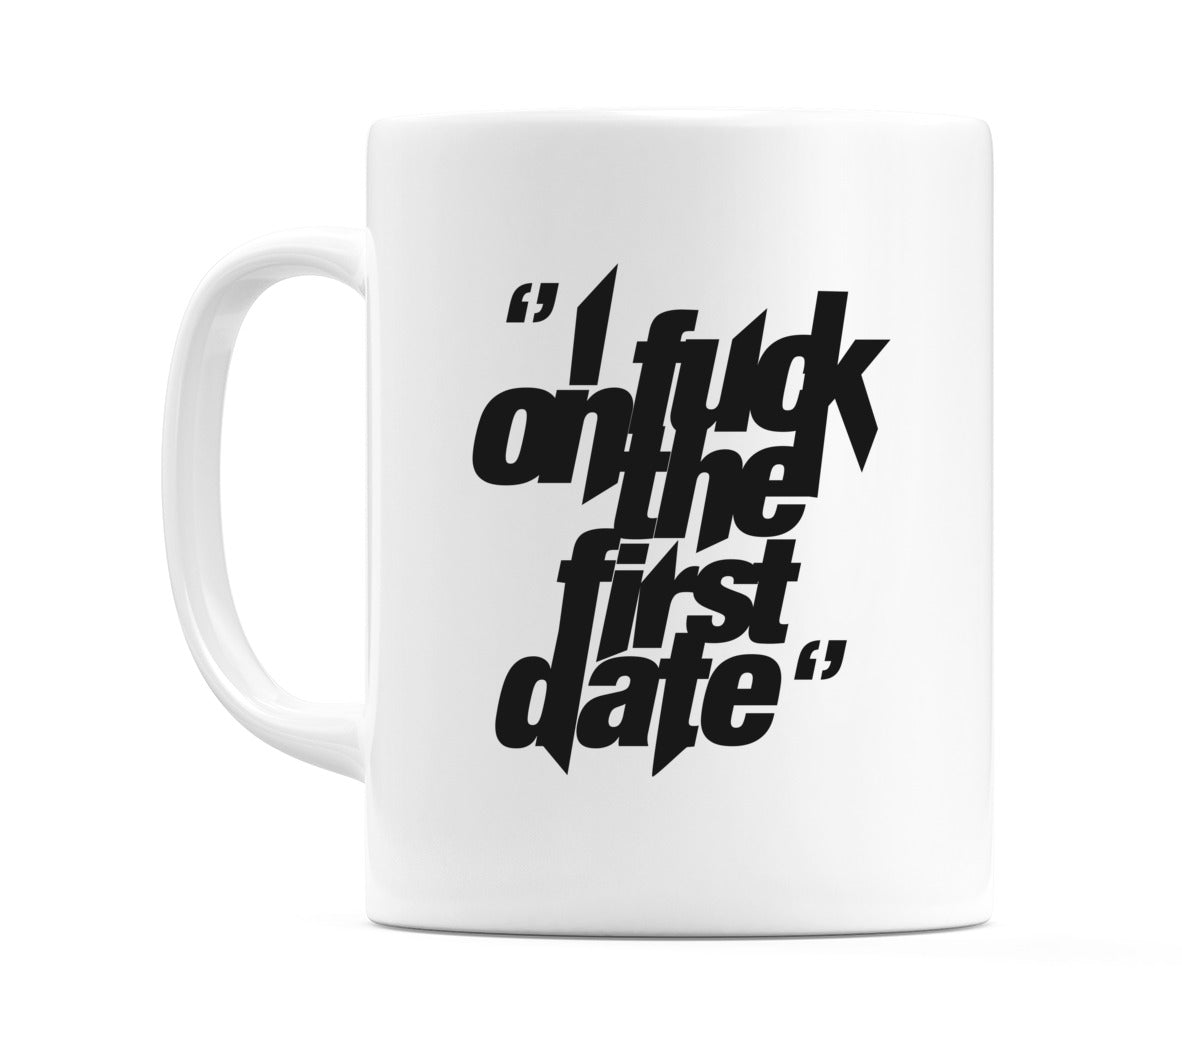 "I f**k on the first date" Mug